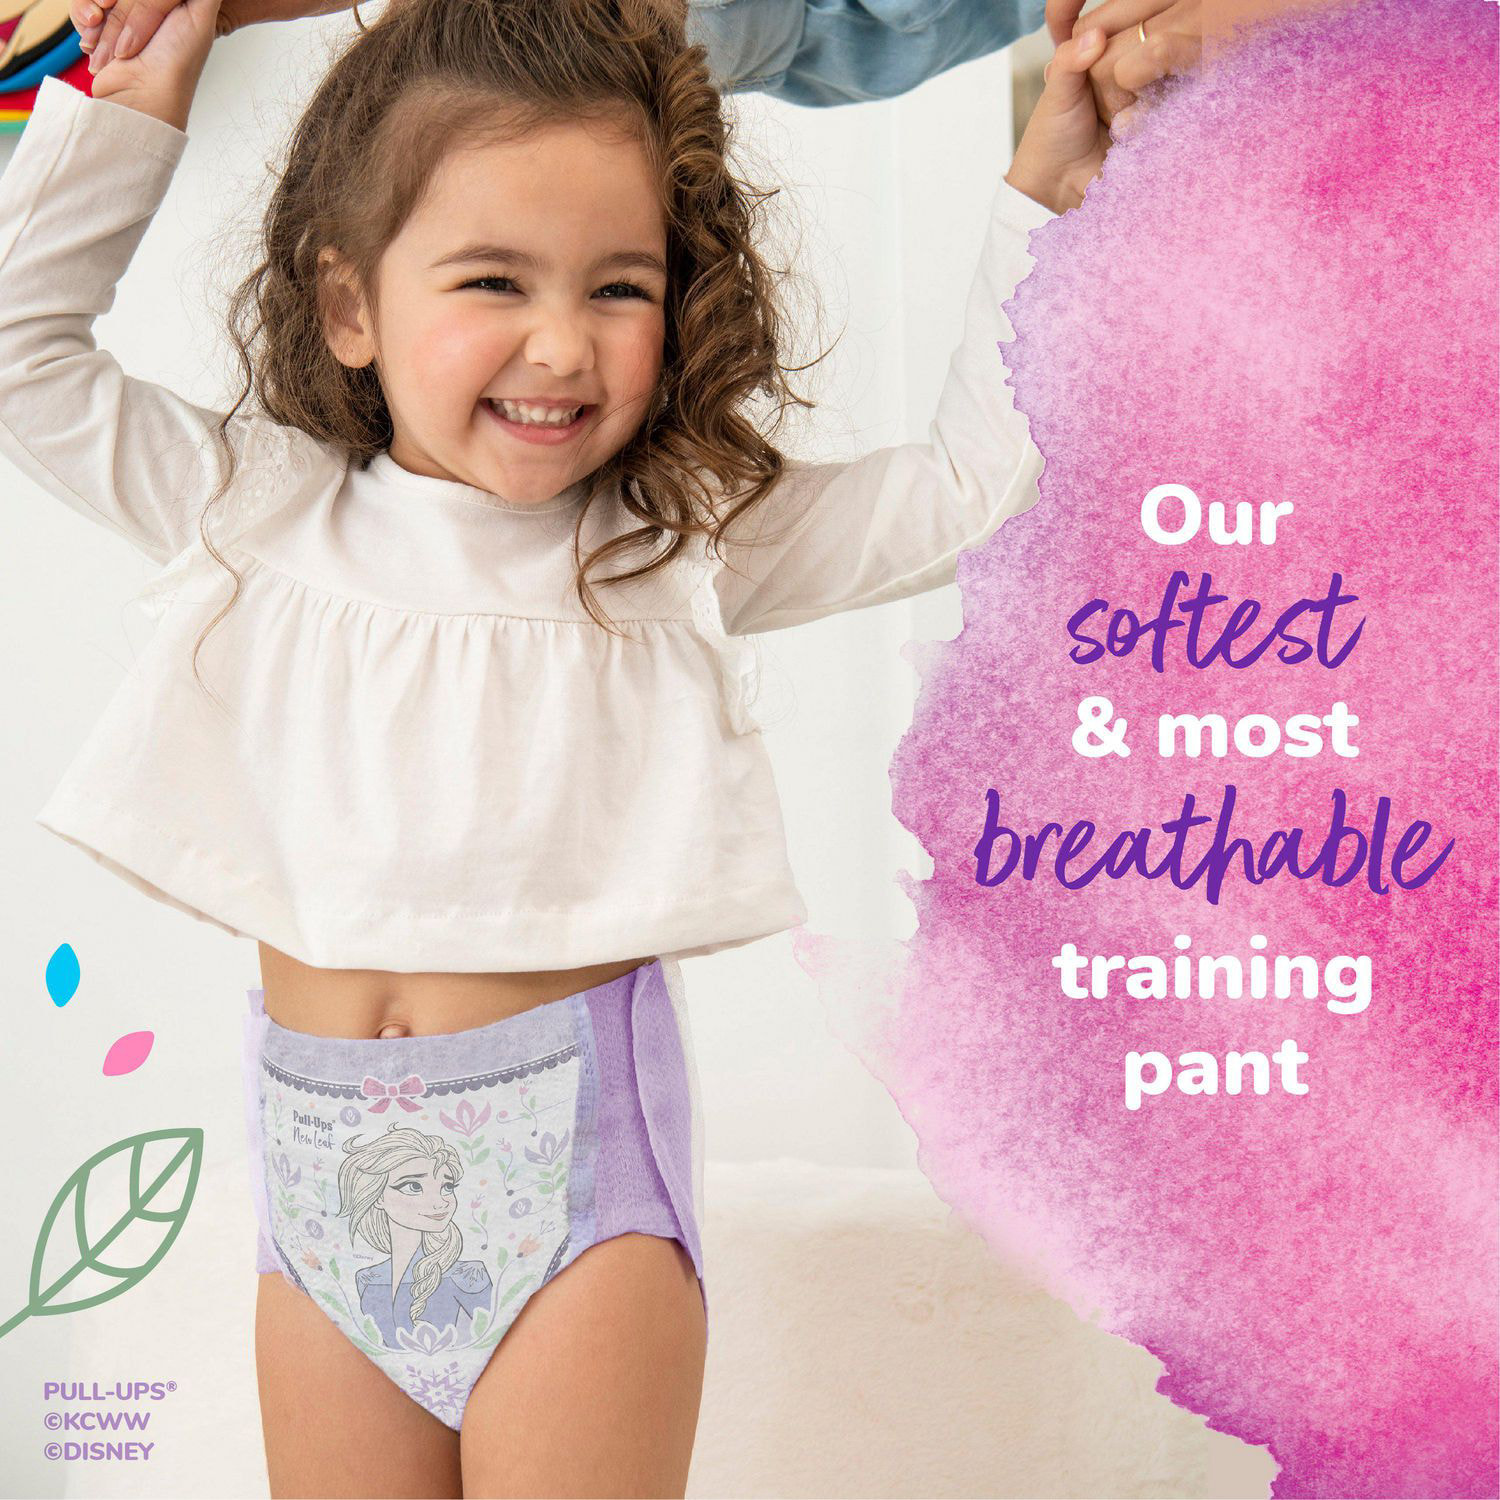 Pull-Ups New Leaf Potty Training Pants, Economy plus - Girls 